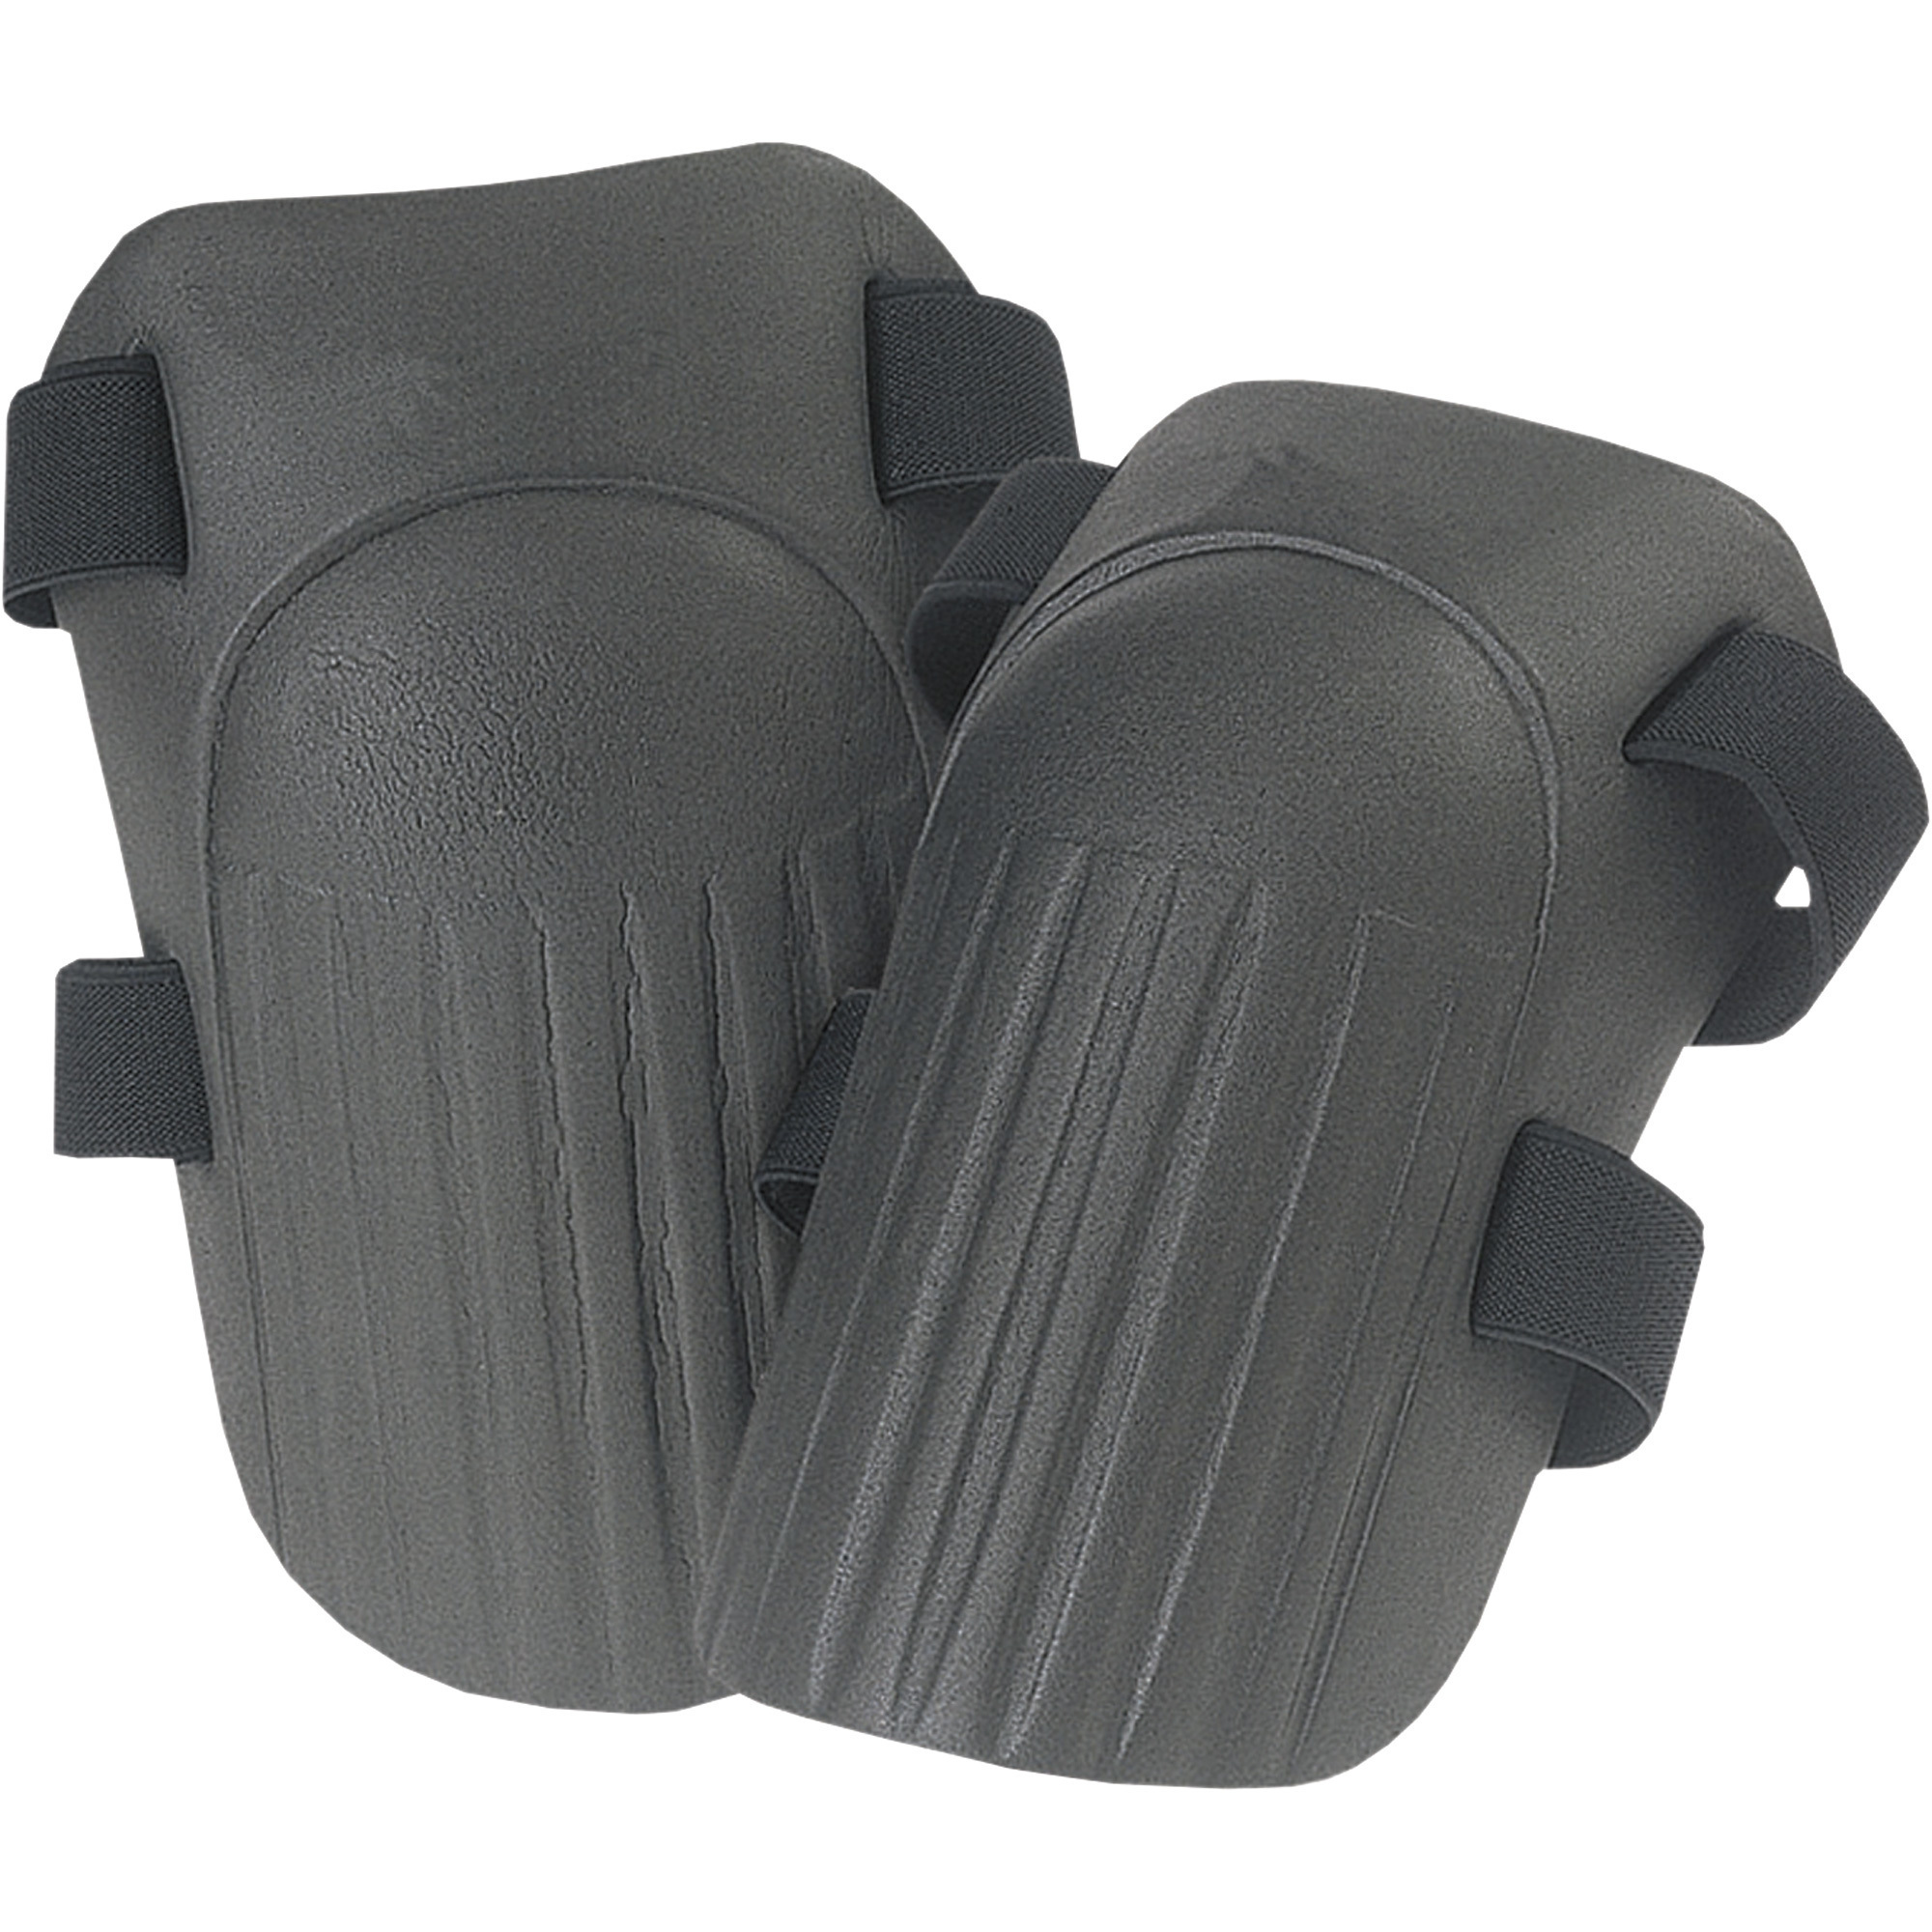 CLC Durable Foam Kneepads â Black, Model V229